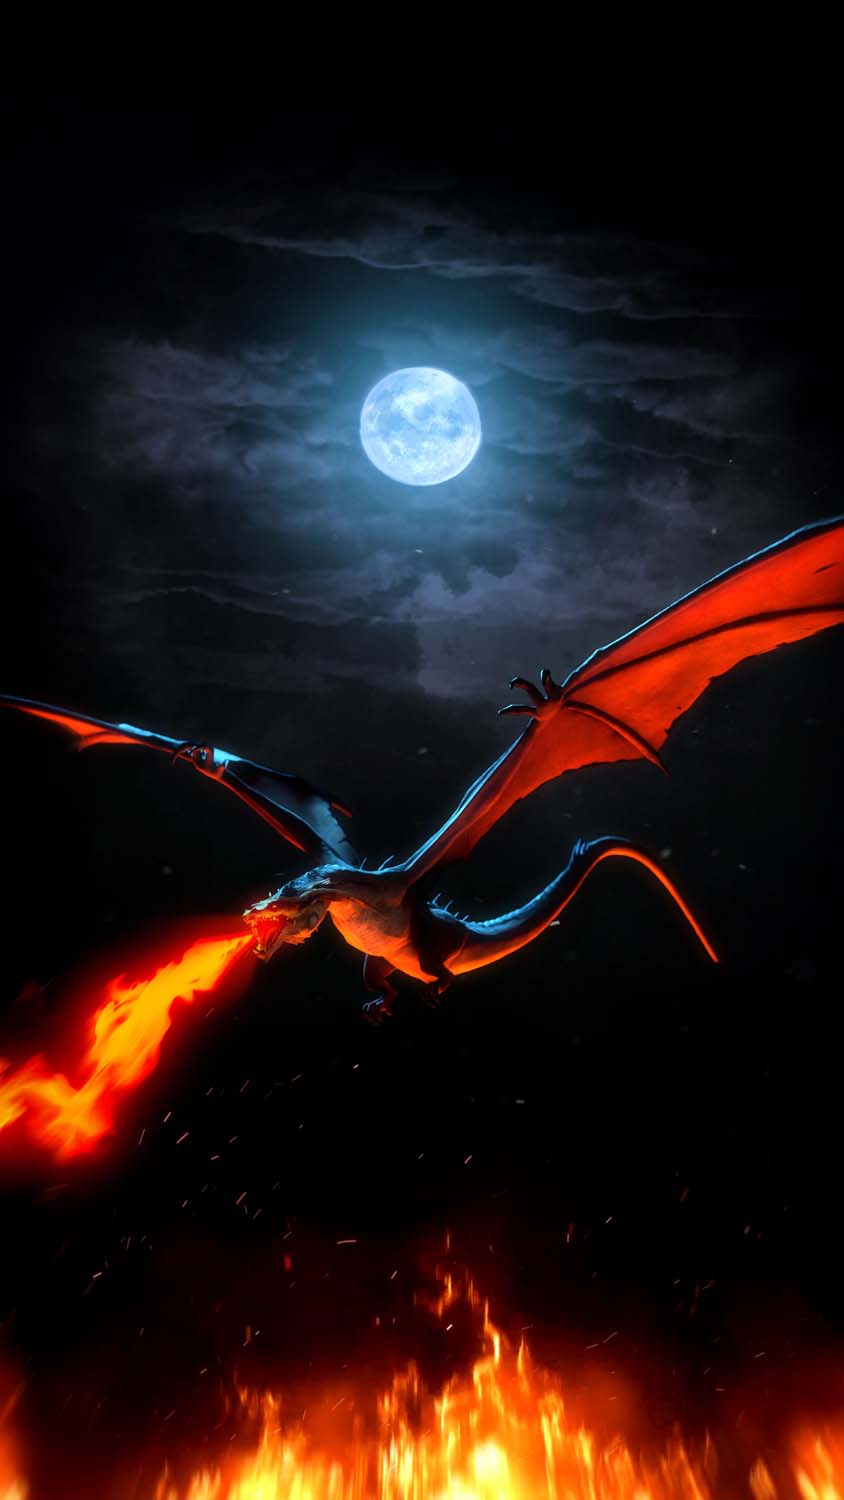 Fire Dragon iPhone Wallpaper HD